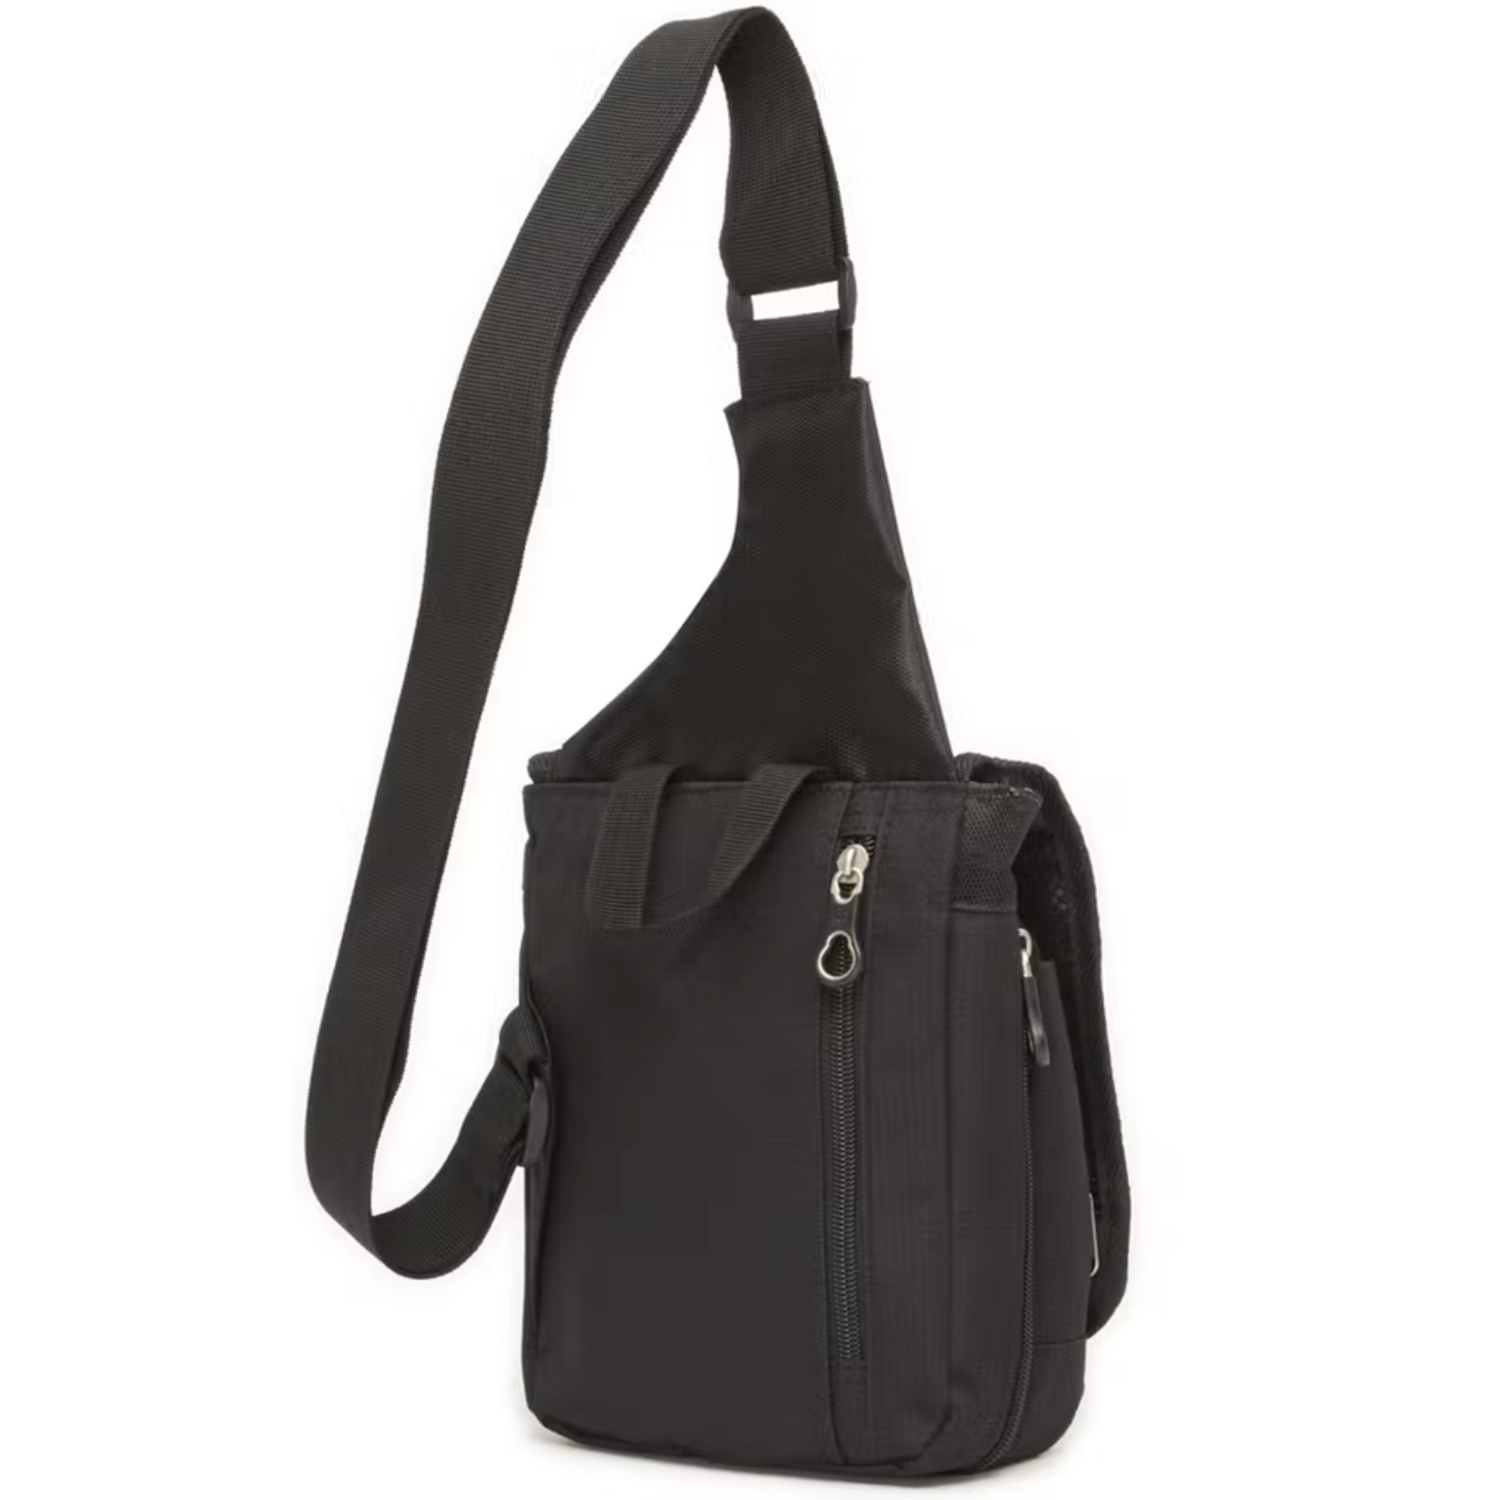 K-swiss Crossbody Bag Black Handbag New With Tags 